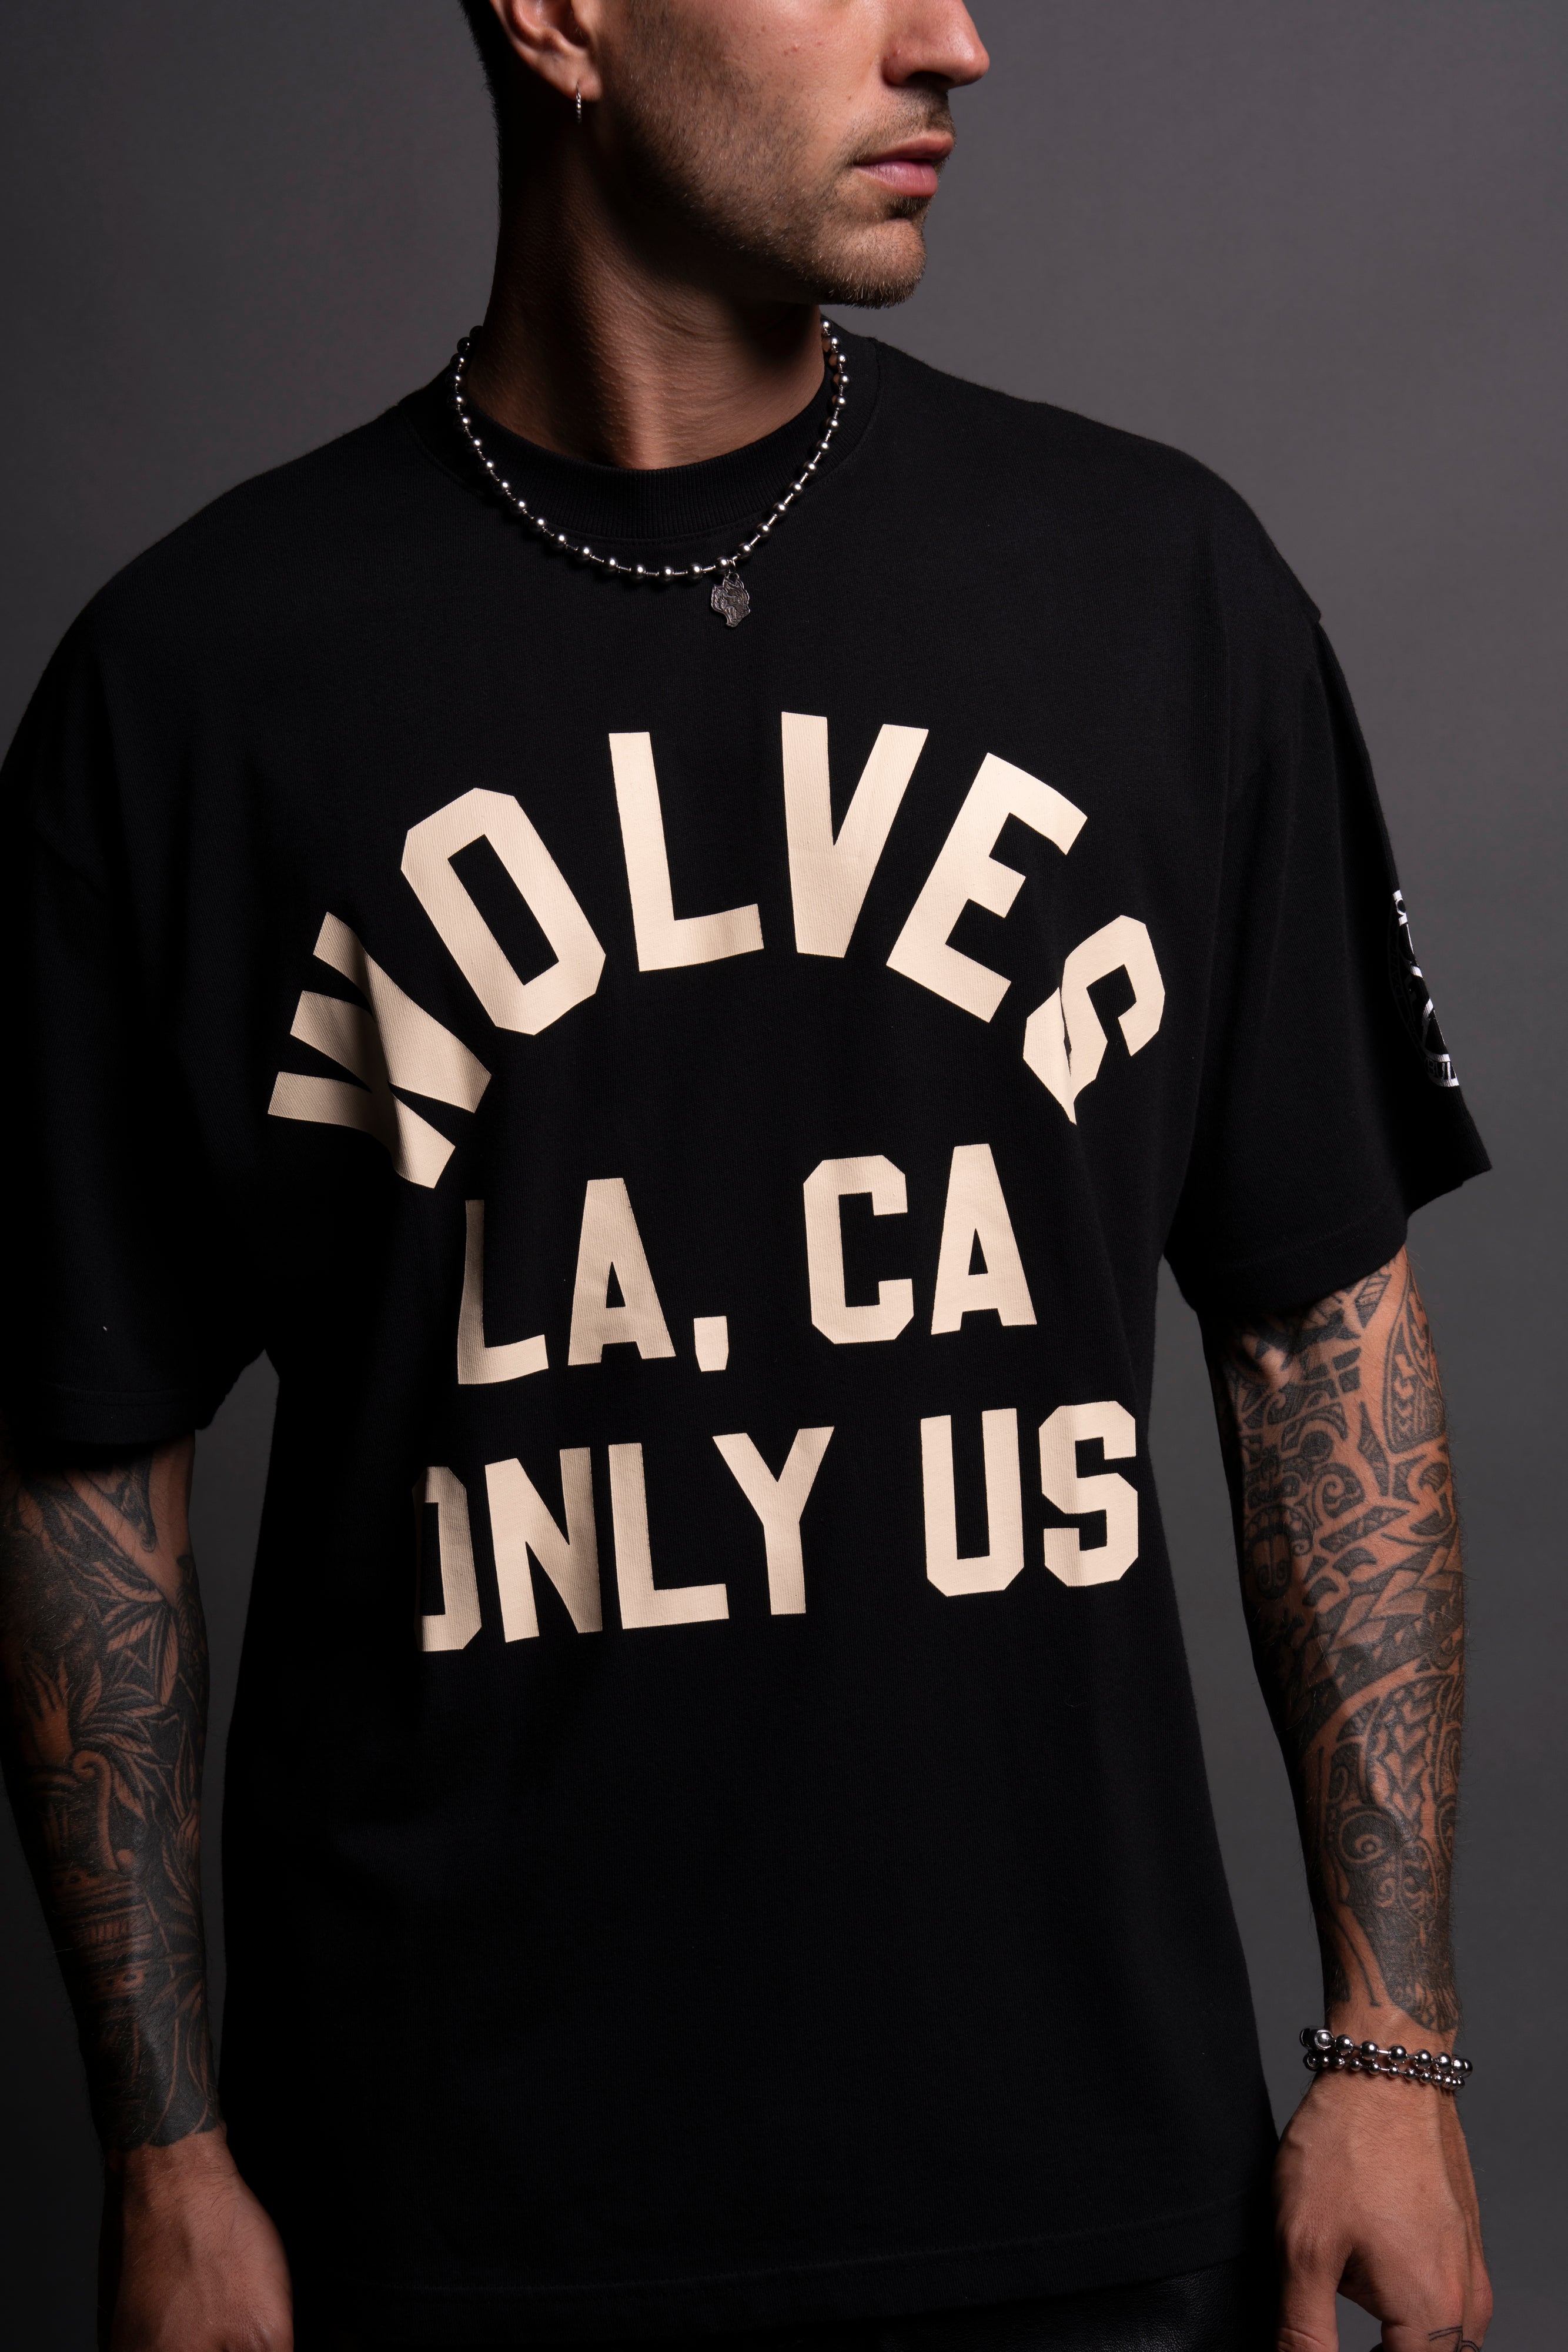 LA Wolves League "Premium" Oversized Tee in Black